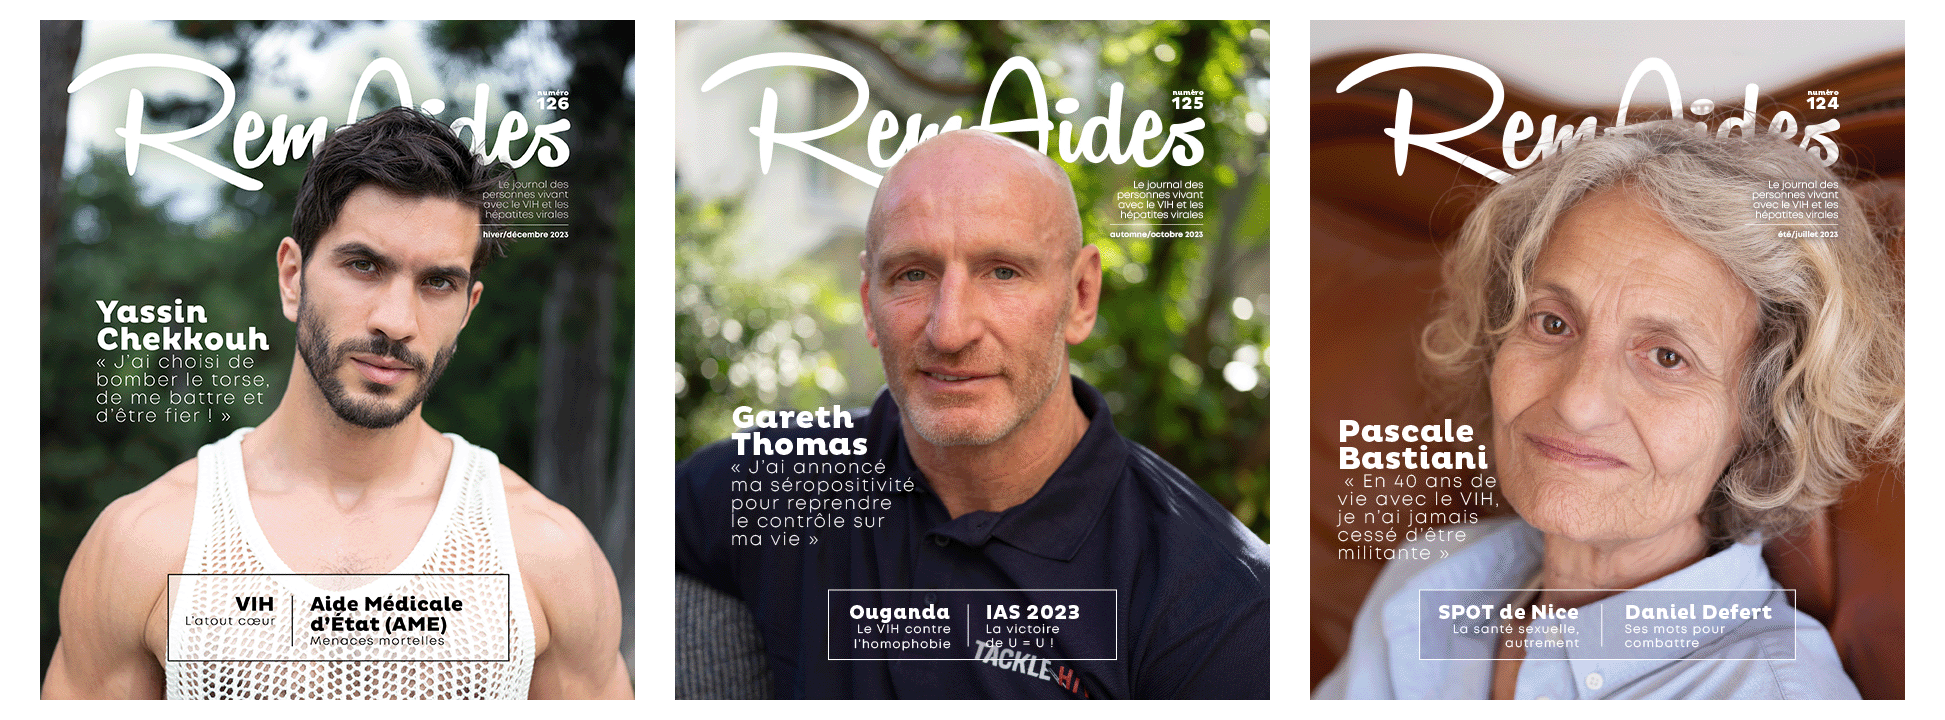 REMAIDES magazine VIH